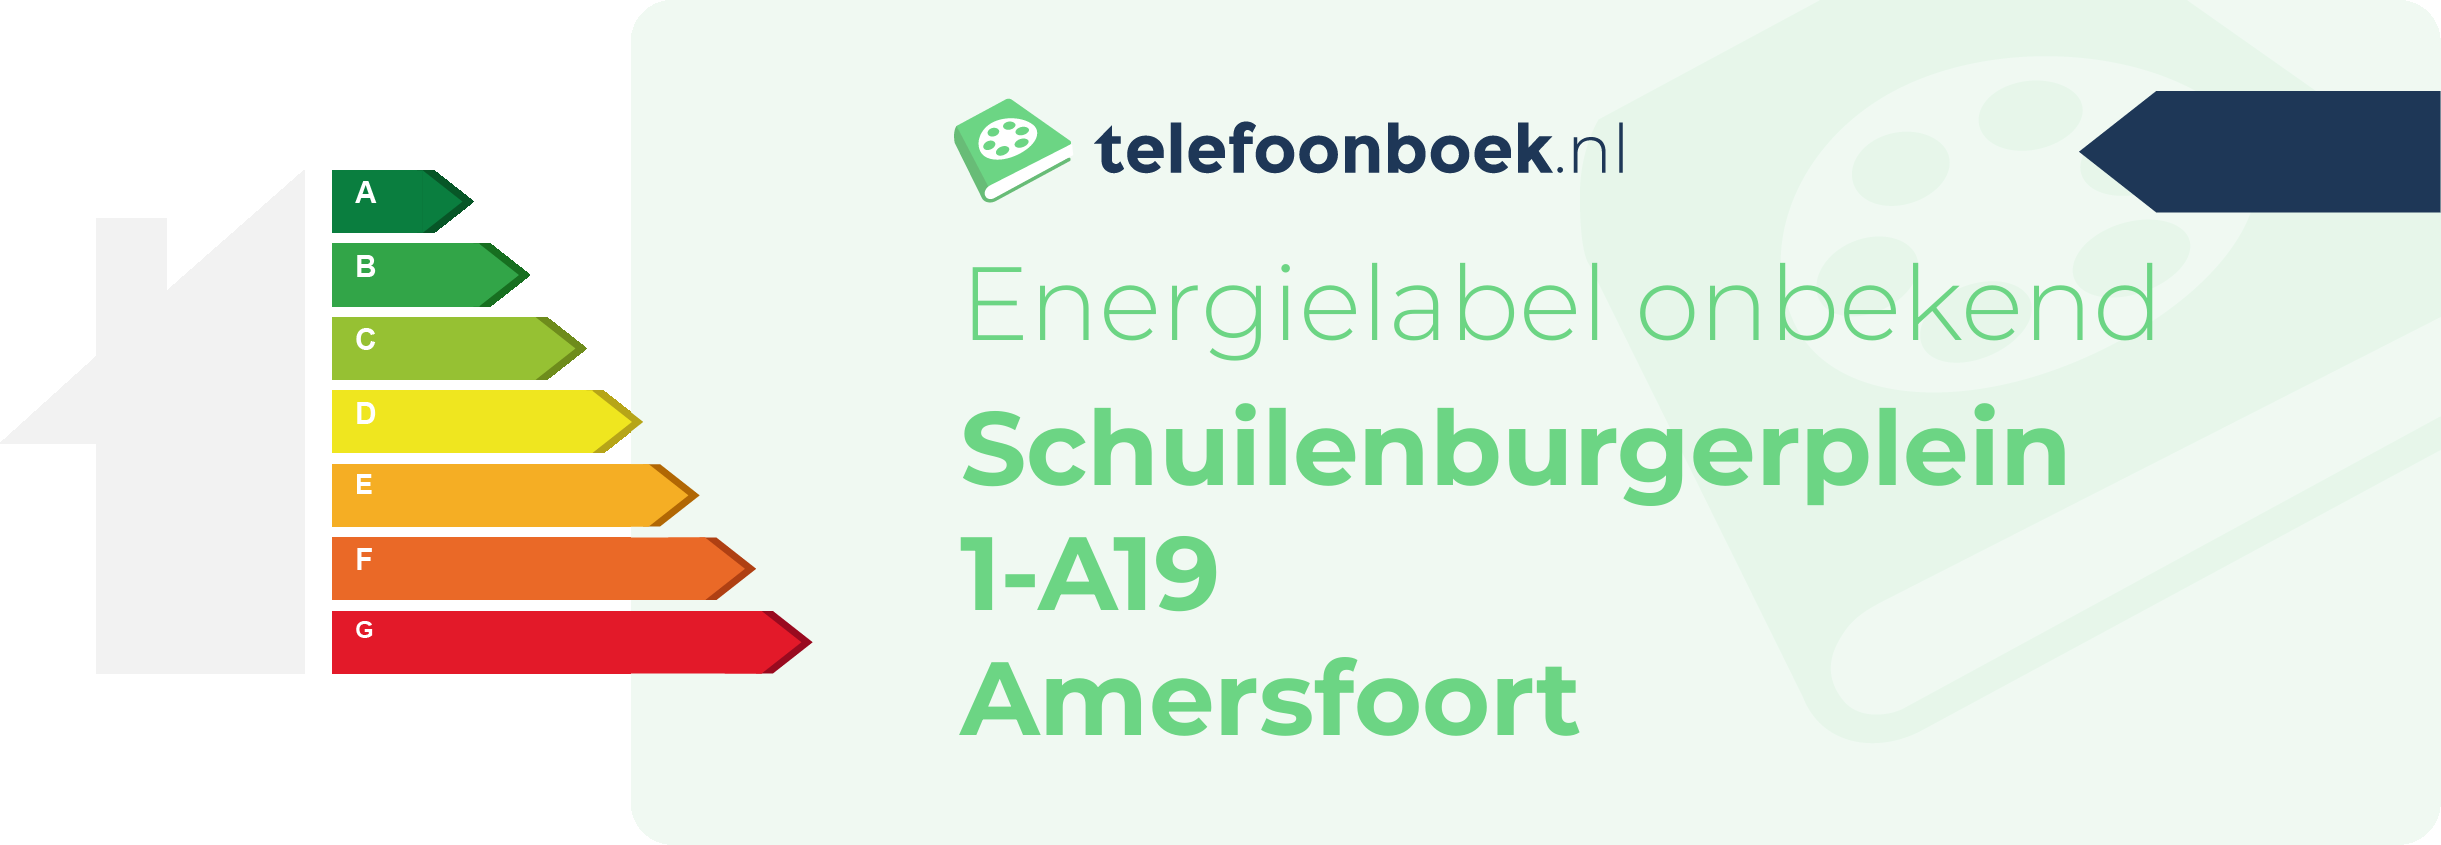 Energielabel Schuilenburgerplein 1-A19 Amersfoort